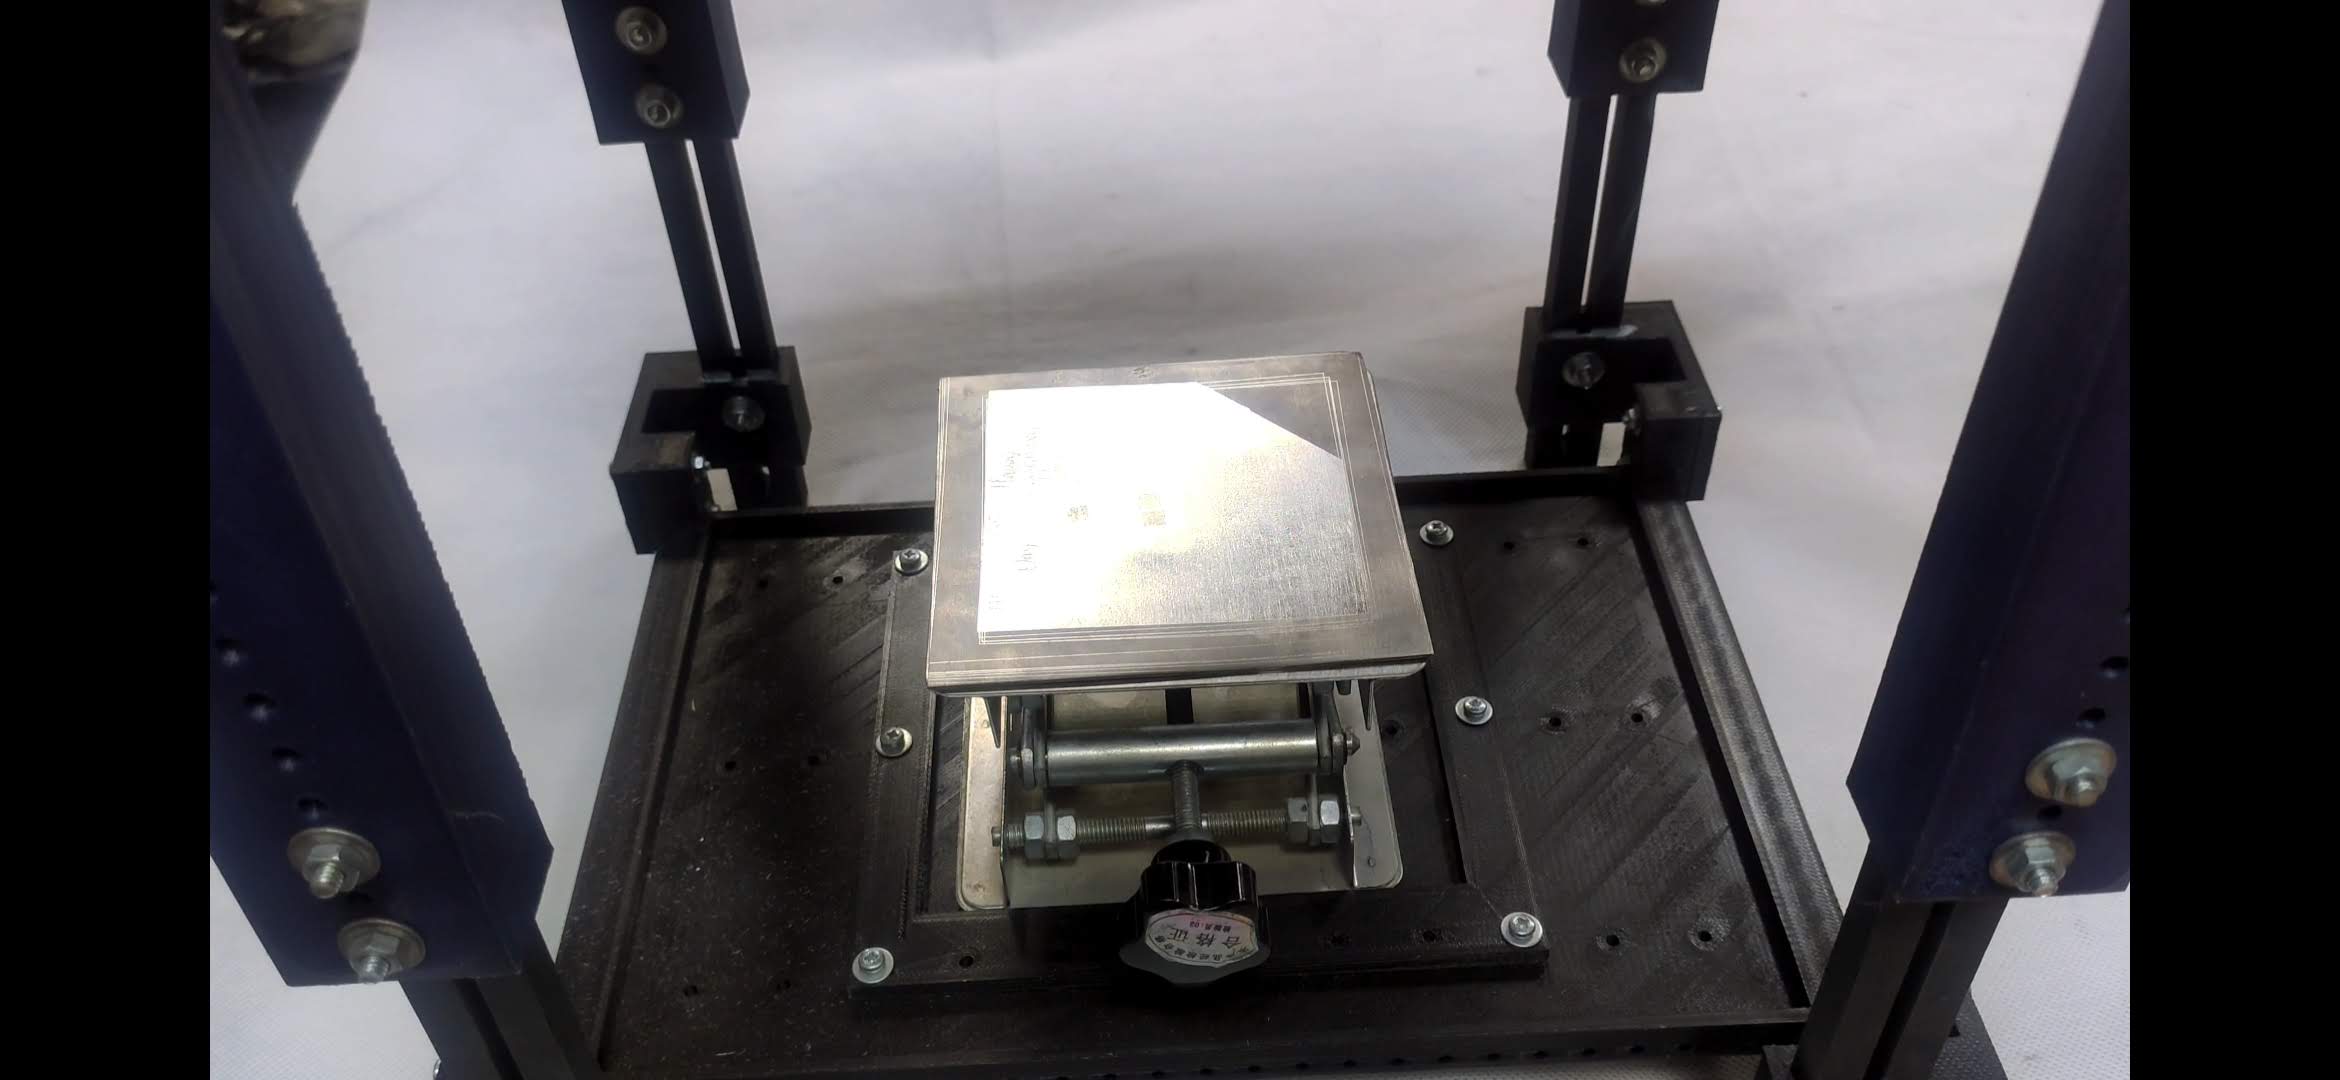 An Endurance DIY galvo engraving machine